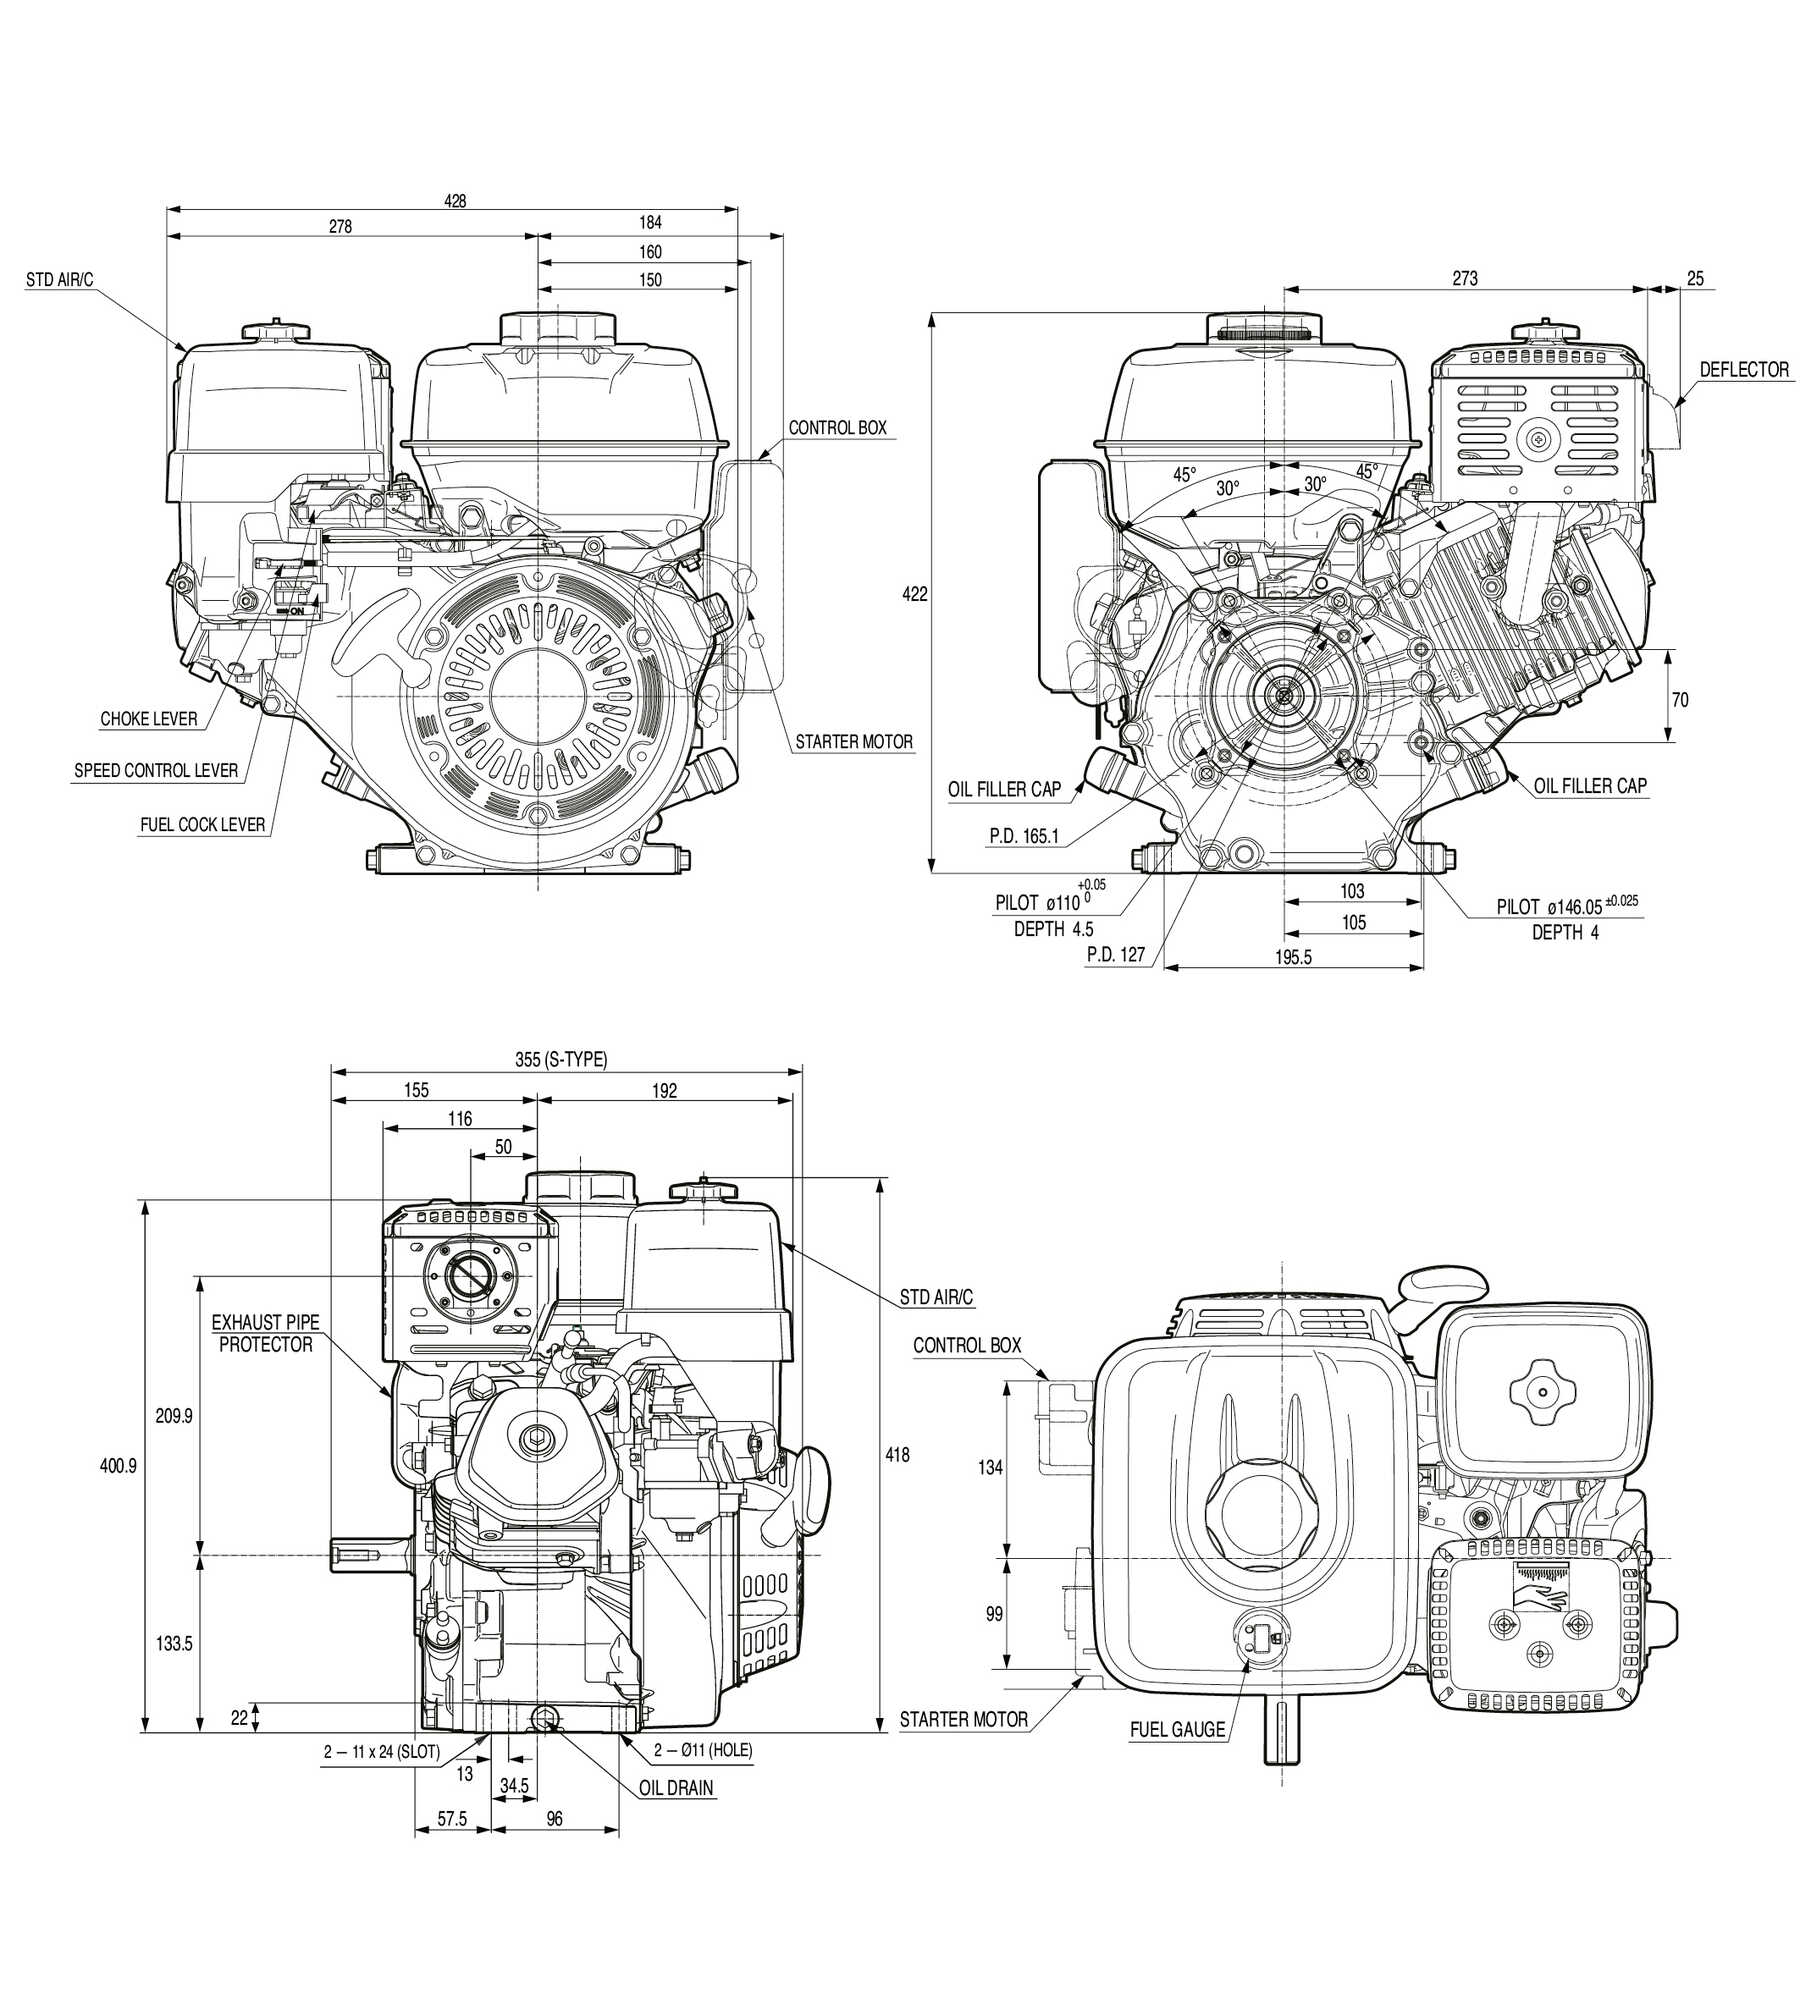 Consejo Sostener Broma GX270 - Honda engines